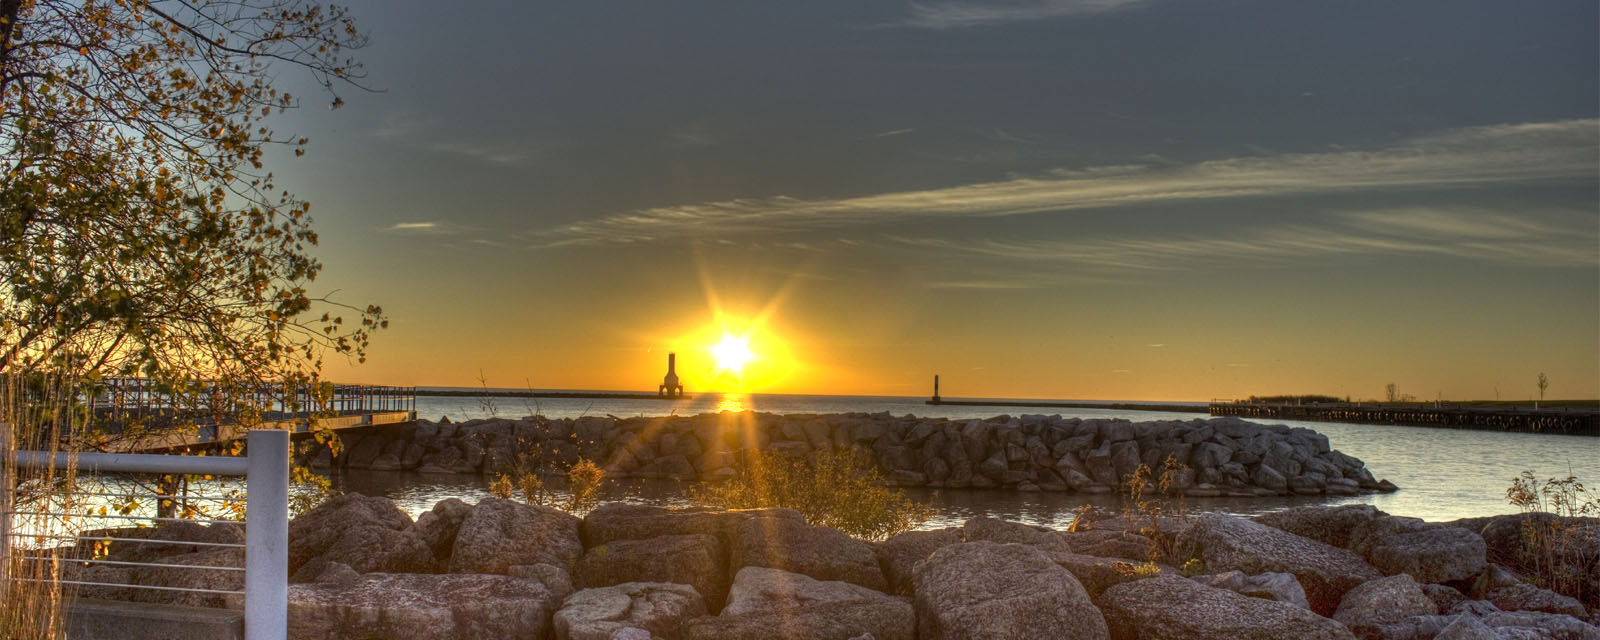 https://www.goodfreephotos.com/united-states/wisconsin/port-washington/wisconsin-port-washington-bright-sunrise-over-the-lake.jpg.php